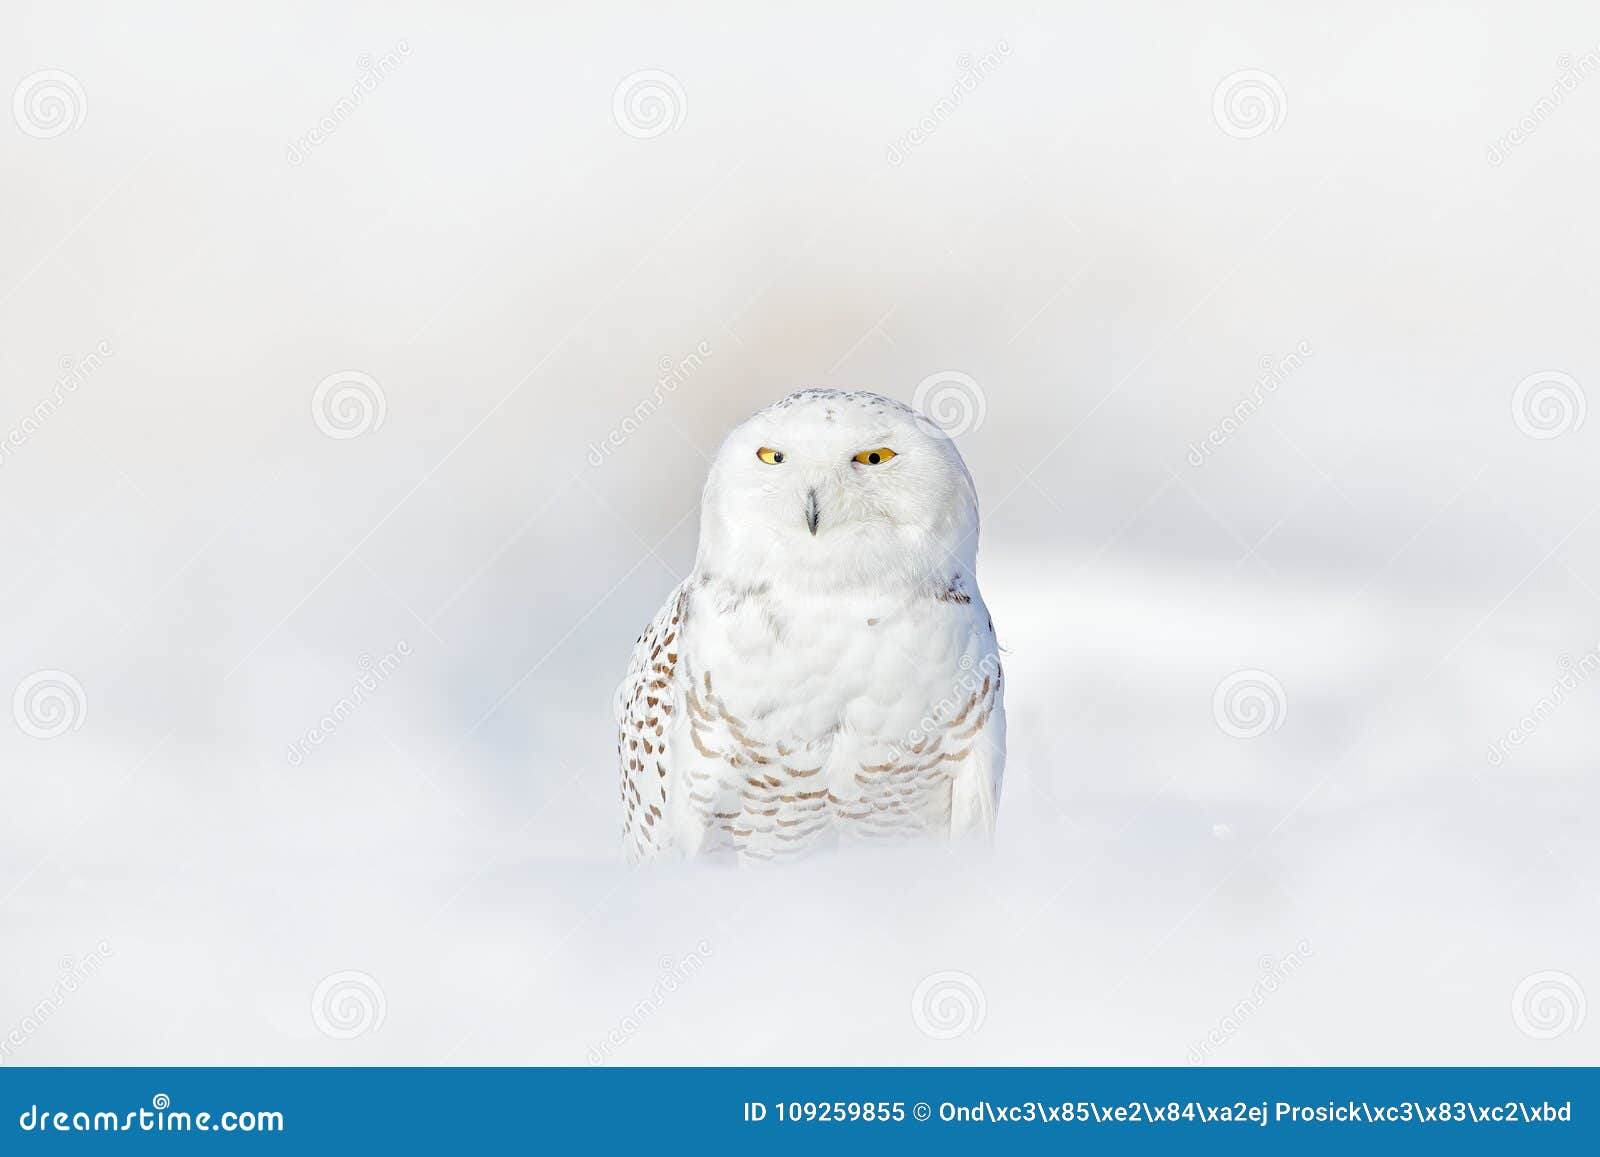 yellow eyes in white plumage feathers. snowy owl, nyctea scandiaca, rare bird sitting on snow, winter with snowflakes in wild finl